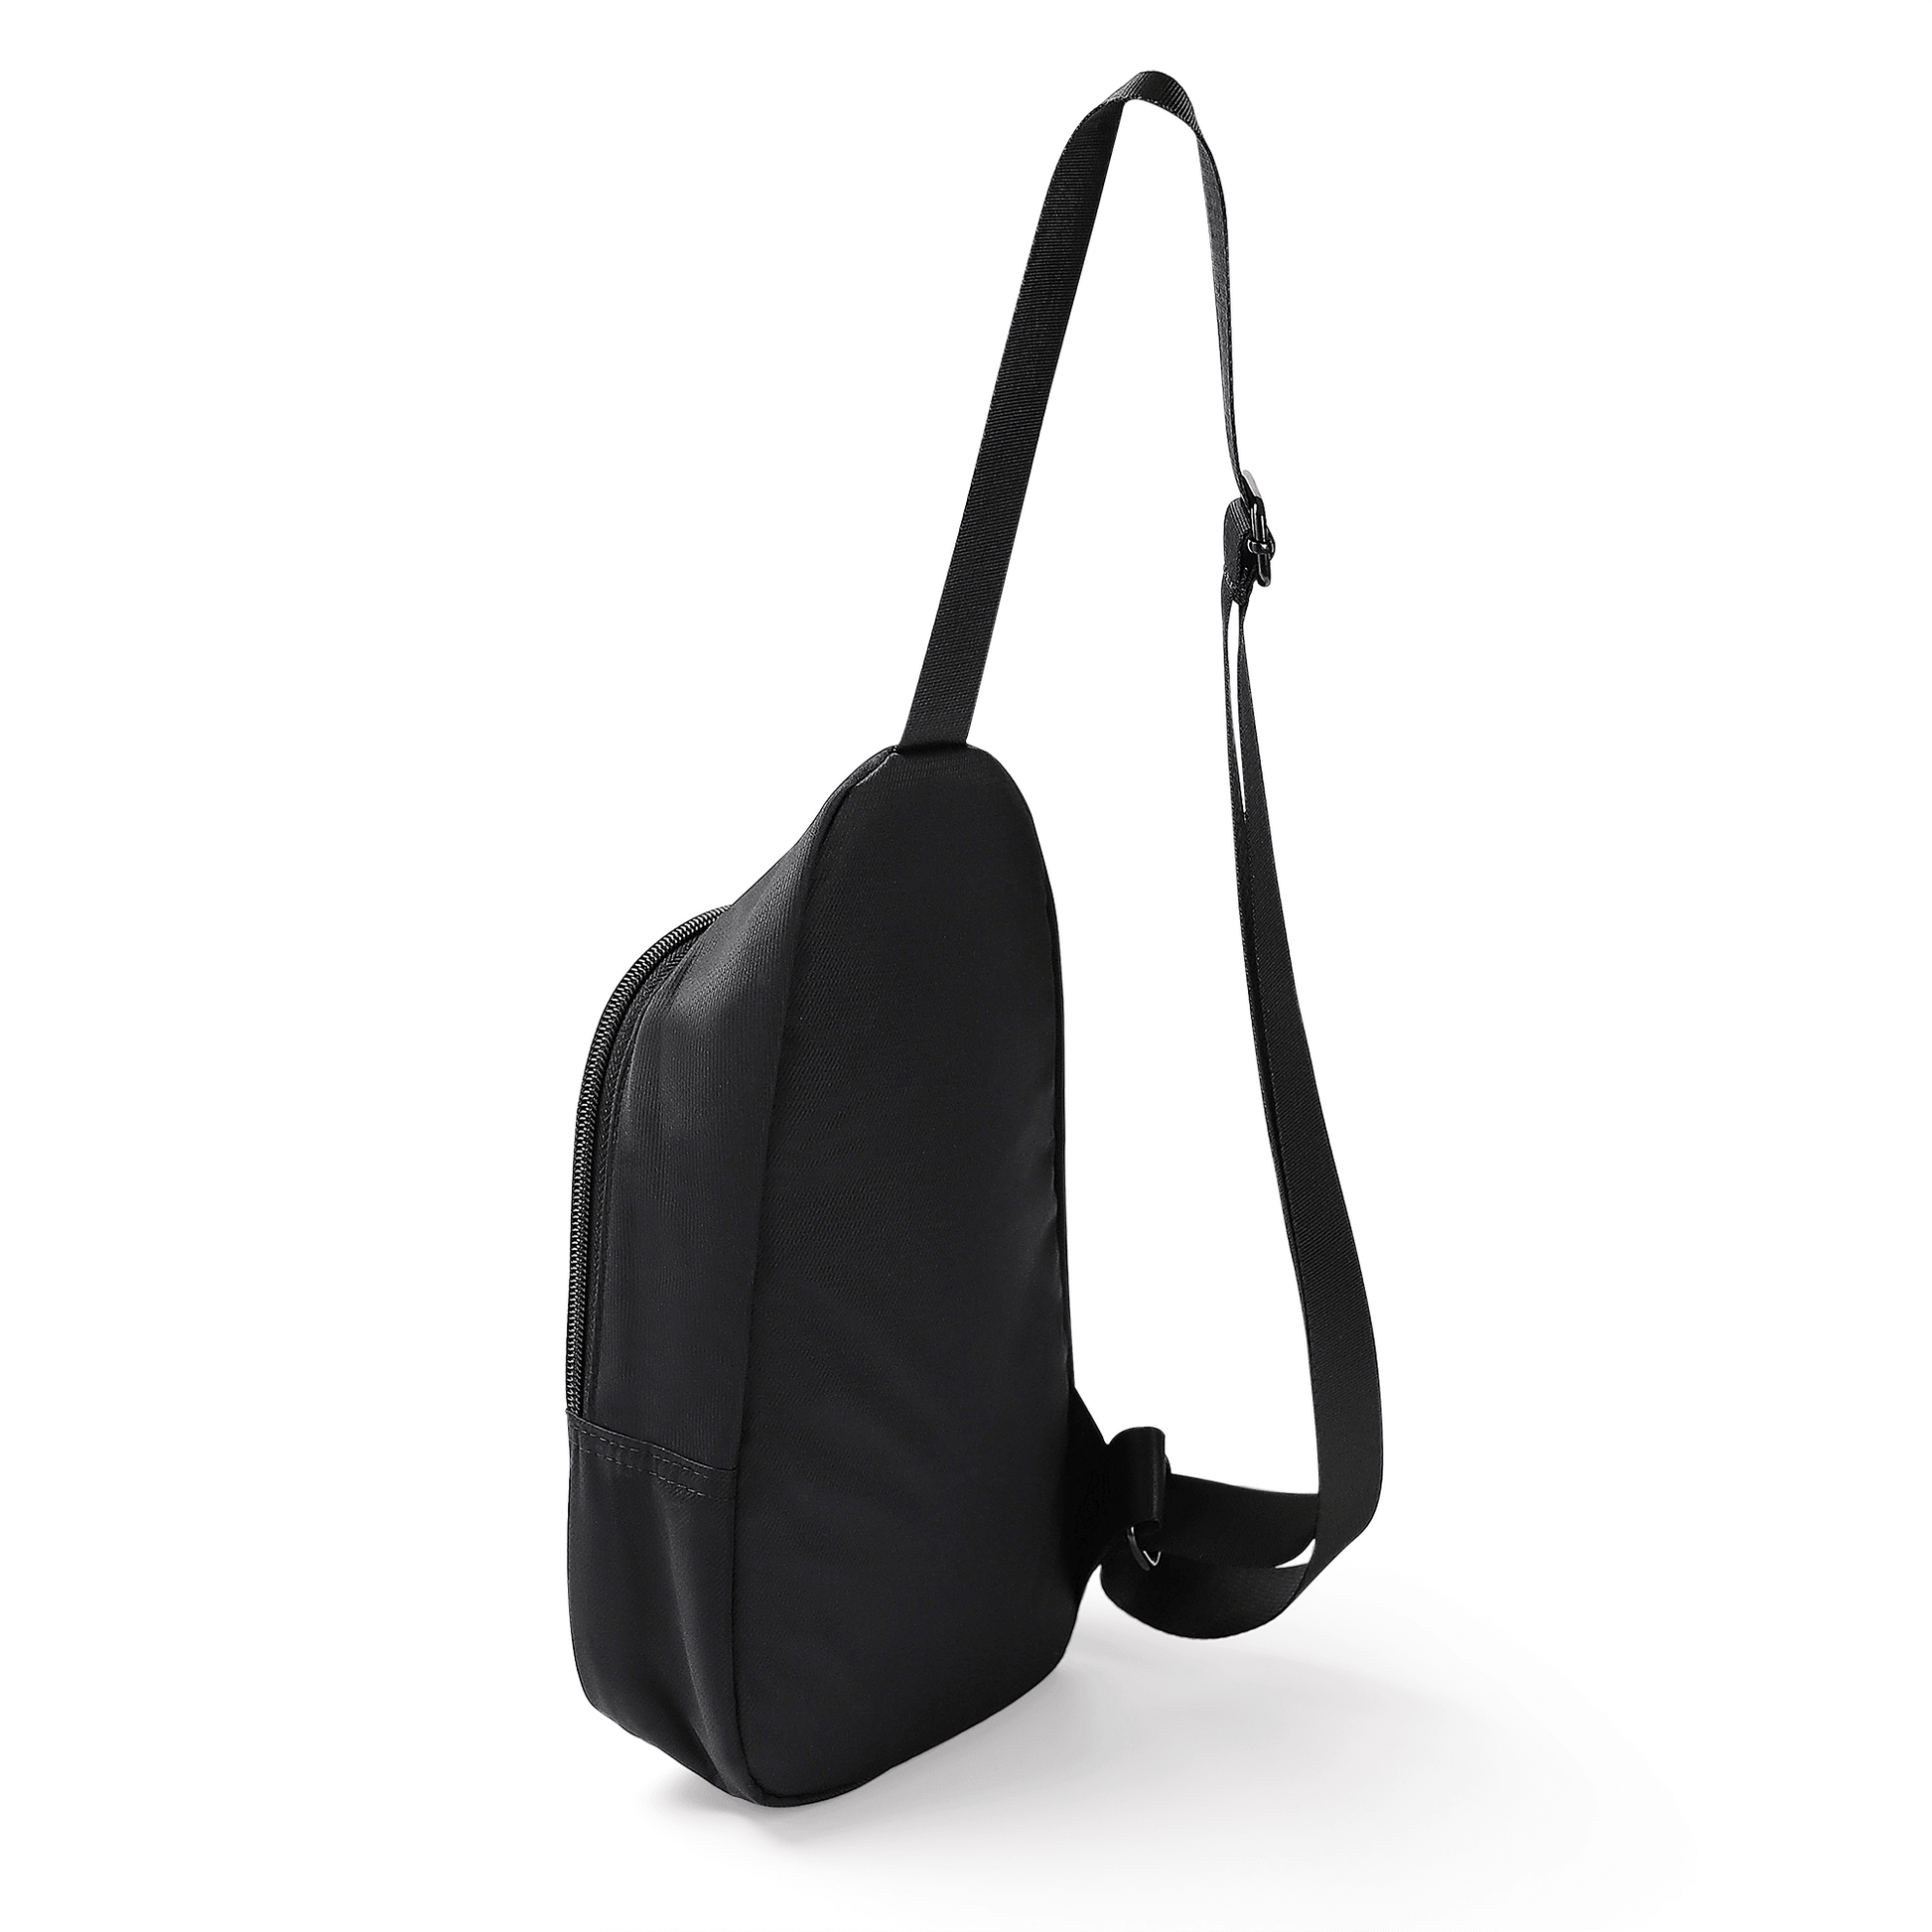 The Black Dragon Chest Bag